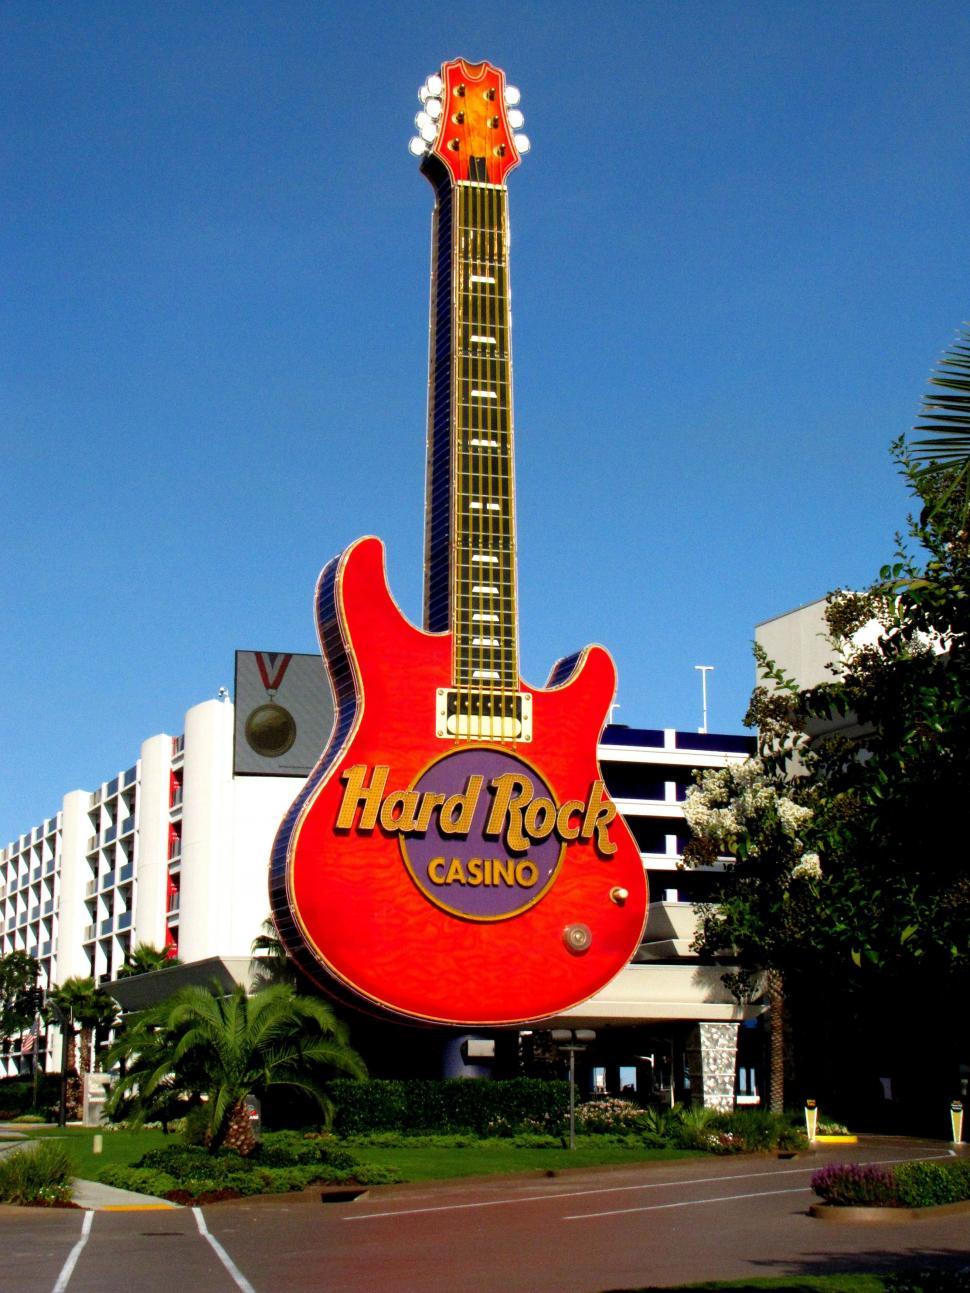 Free Image of Hard Rock Casino Guitar - Beach Blvd, Biloxi 